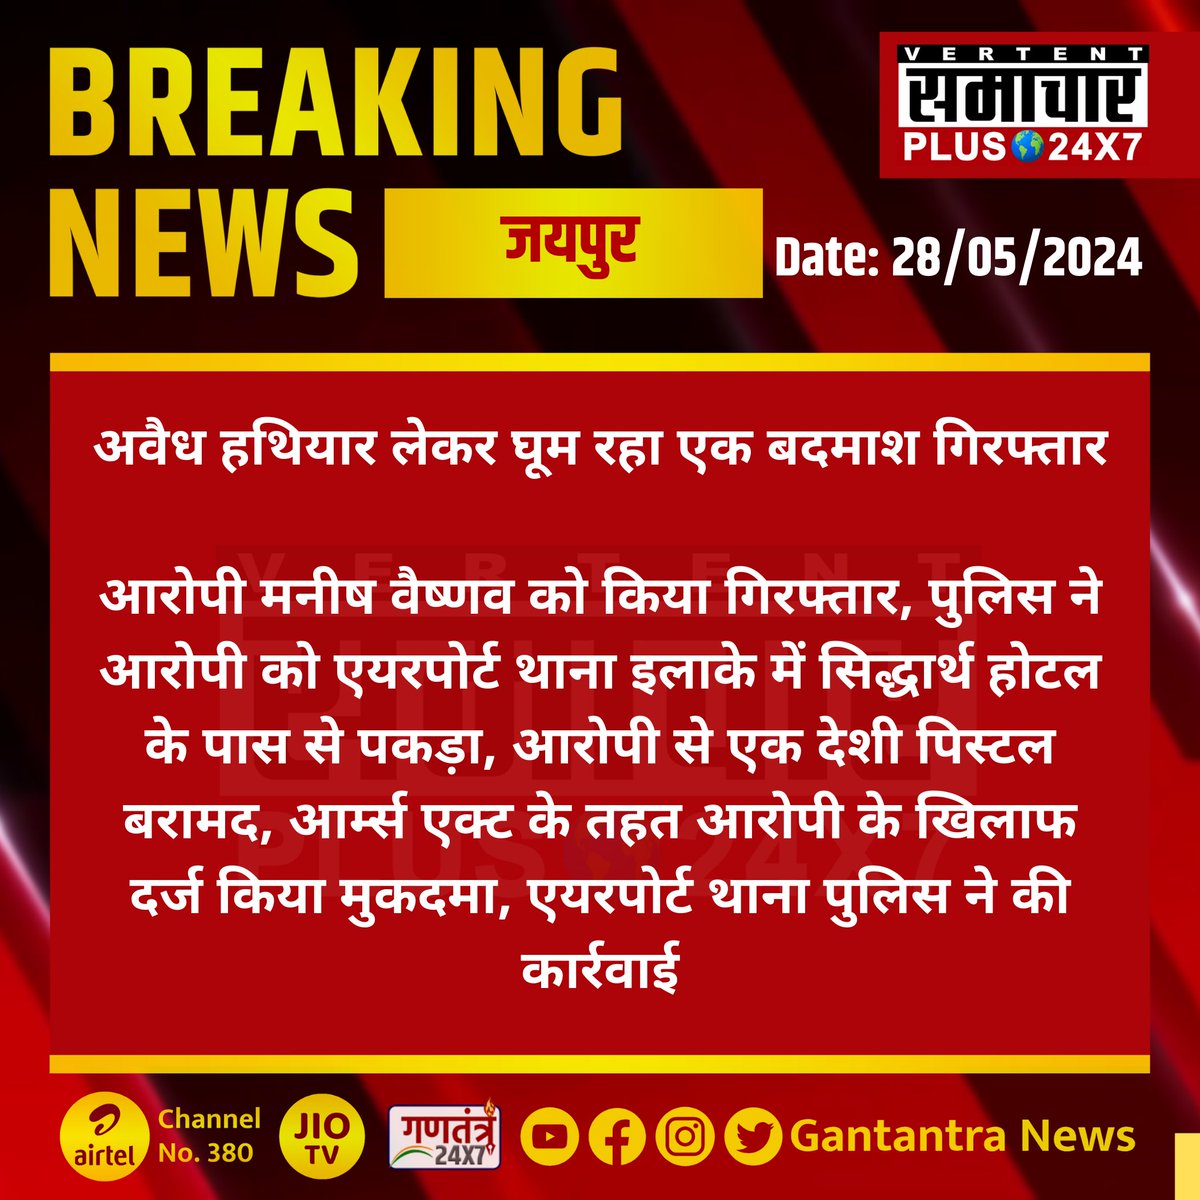 #जयपुर : अवैध हथियार लेकर घूम रहा एक बदमाश गिरफ्तार

आरोपी मनीष वैष्णव को किया गिरफ्तार...
#Jaipur #RajasthanNews #SamacharPlus
@jaipur_police @PoliceRajasthan